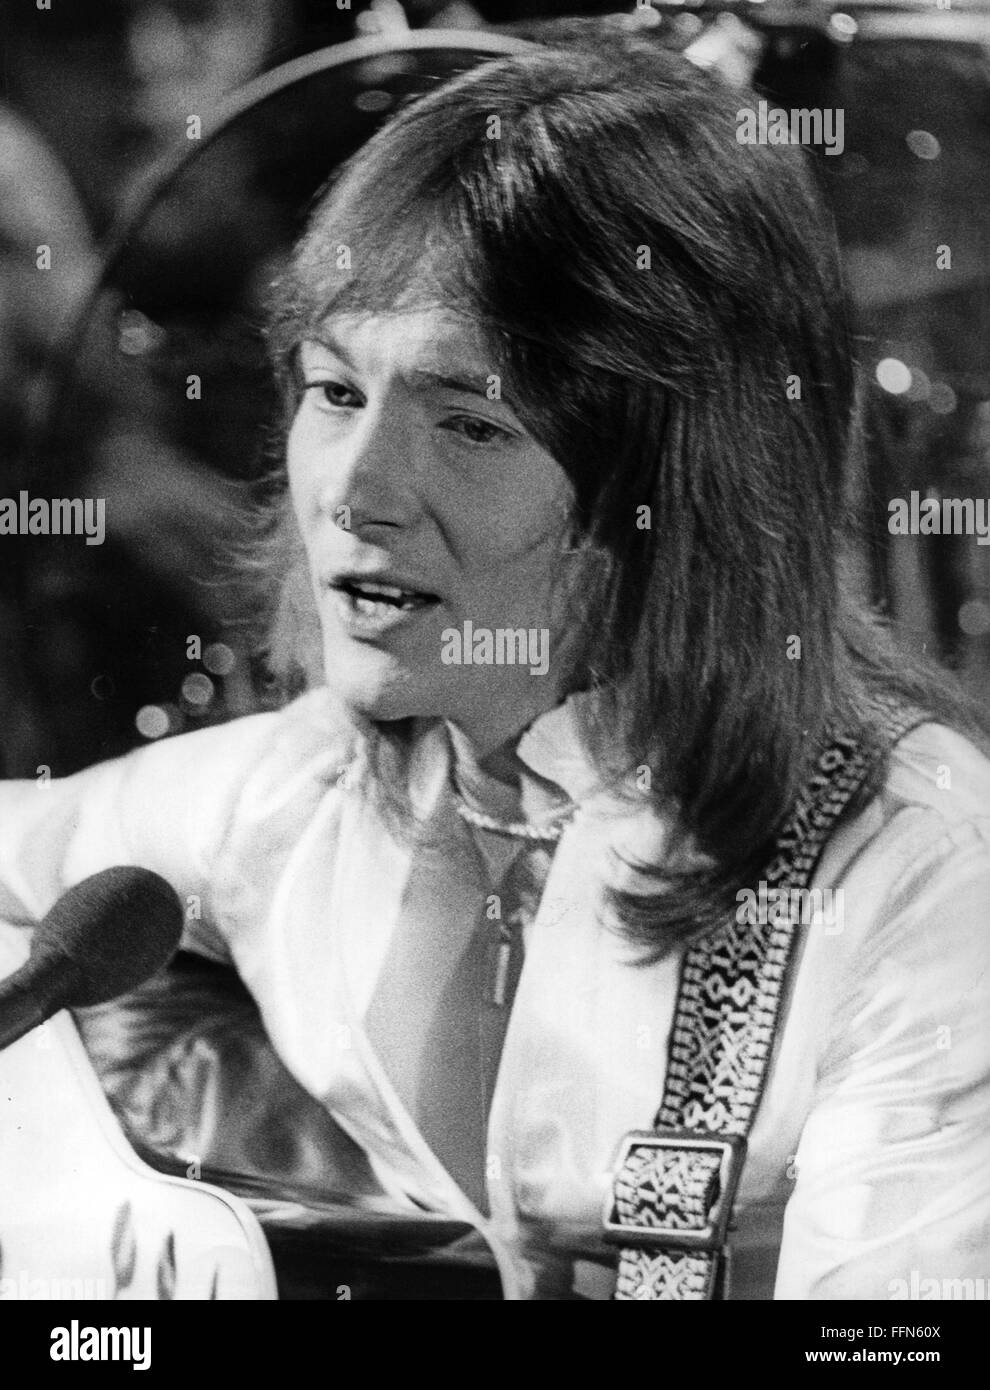 Norman, Chris, * 25.10.1950, British singer (pop), portrait, as lead singer of the group 'Smokie', 1977, Stock Photo